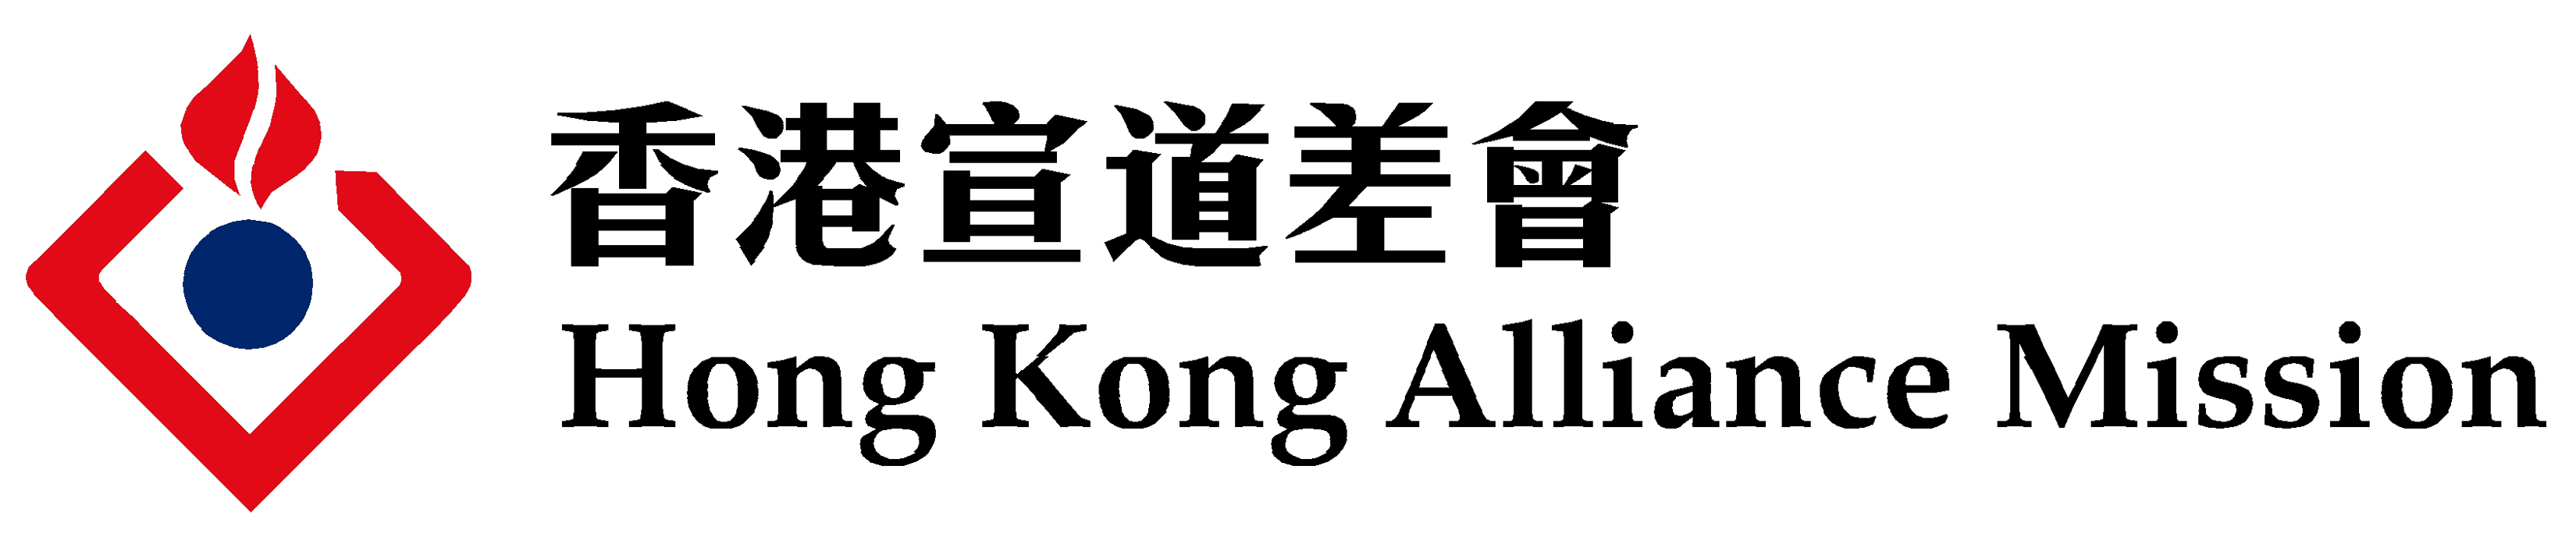 Hong Kong Alliance Mission logo